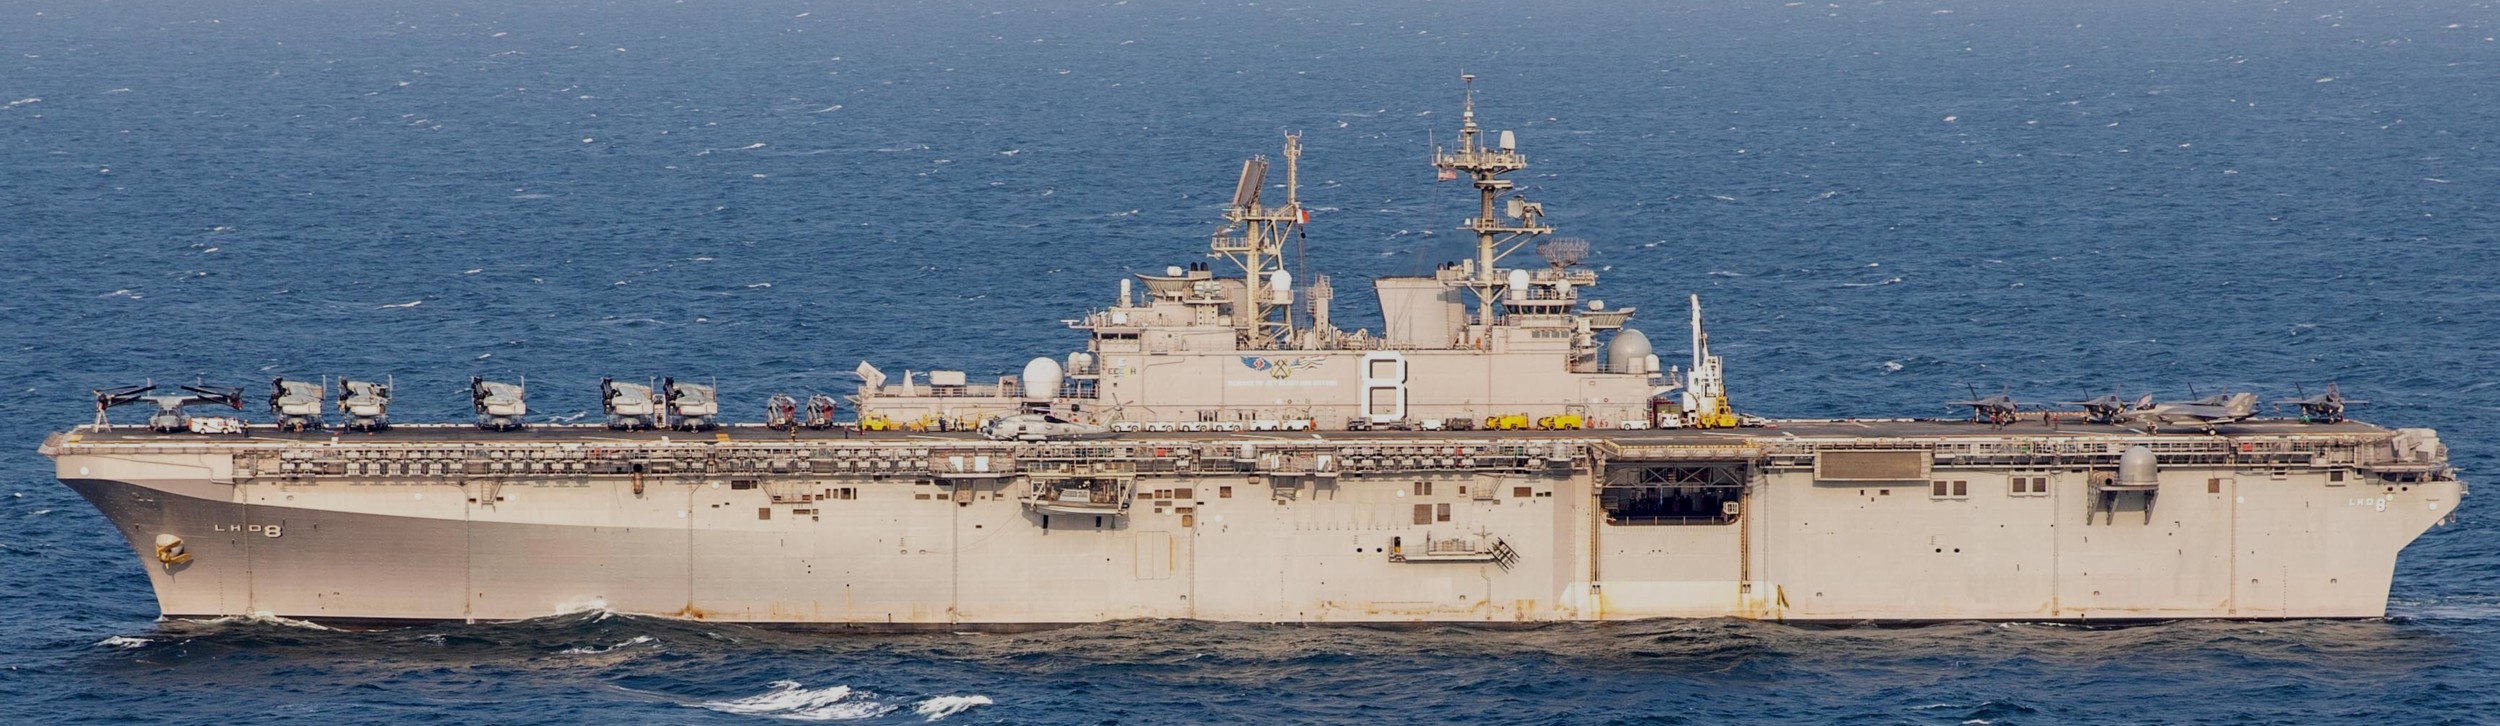 lhd-8 uss makin island amphibious assault ship landing helicopter dock us navy vmm-164 marines arabian sea 146